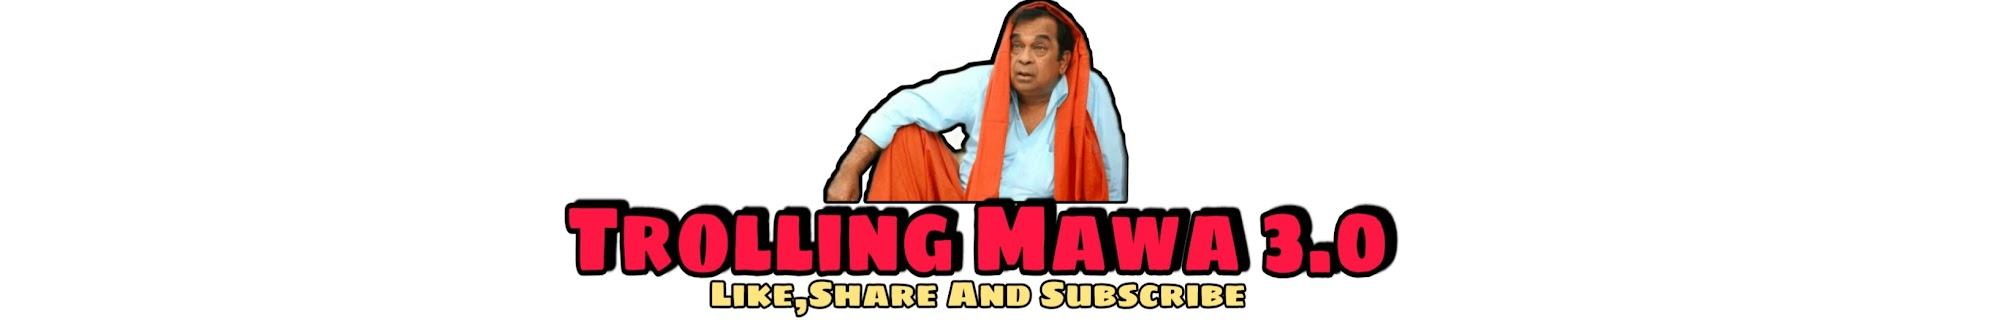 Trolling Mawa 3.0